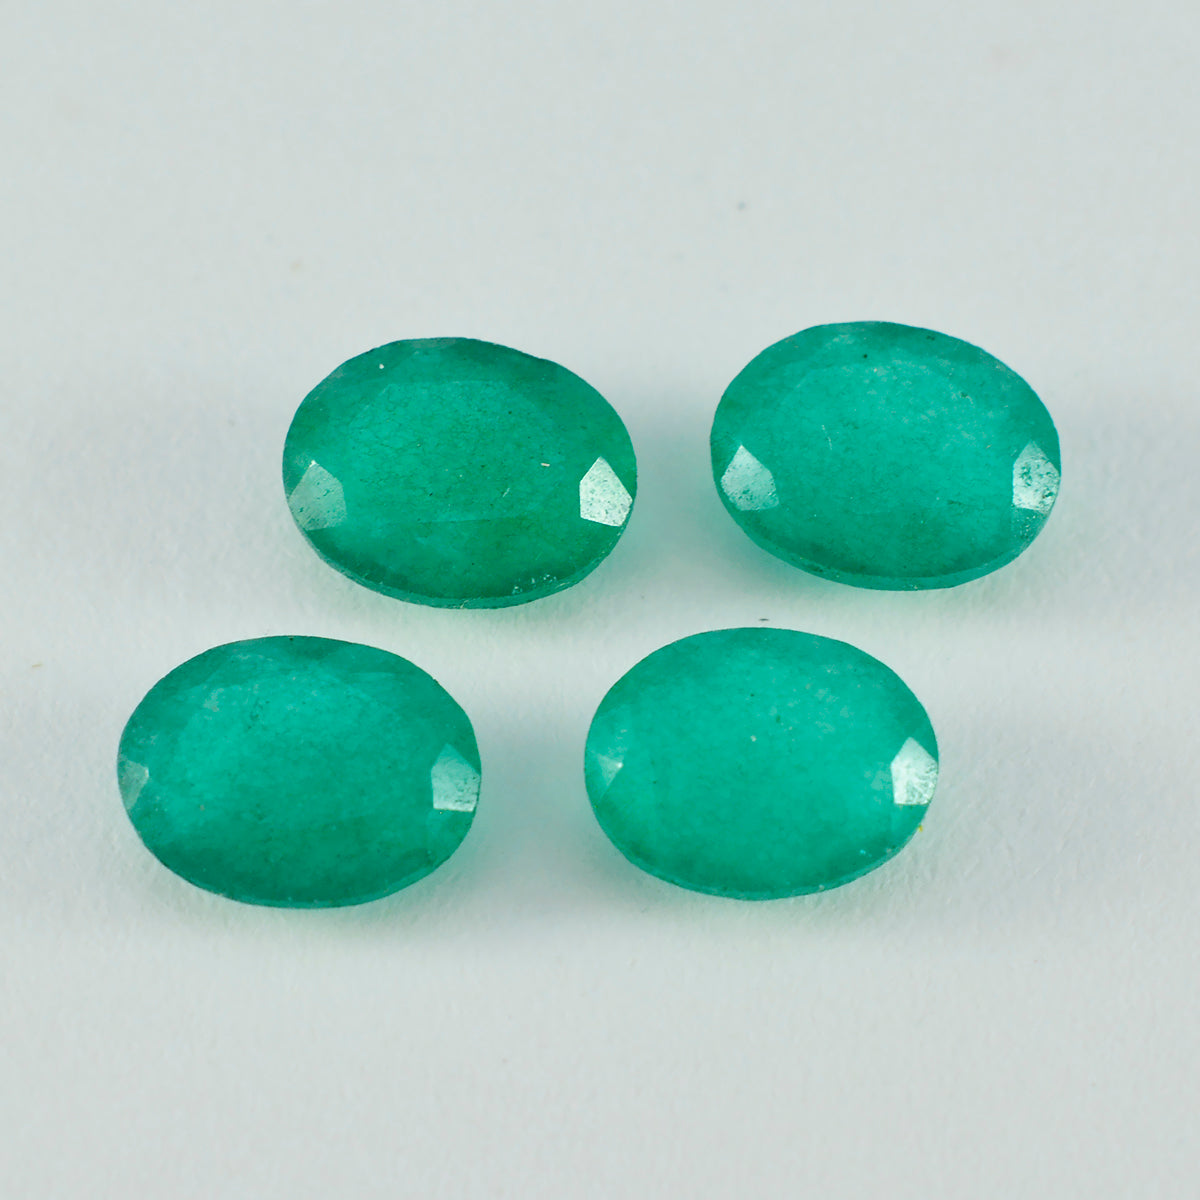 Riyogems 1PC Genuine Green Jasper Faceted 10x14 mm Oval Shape superb Quality Loose Gems